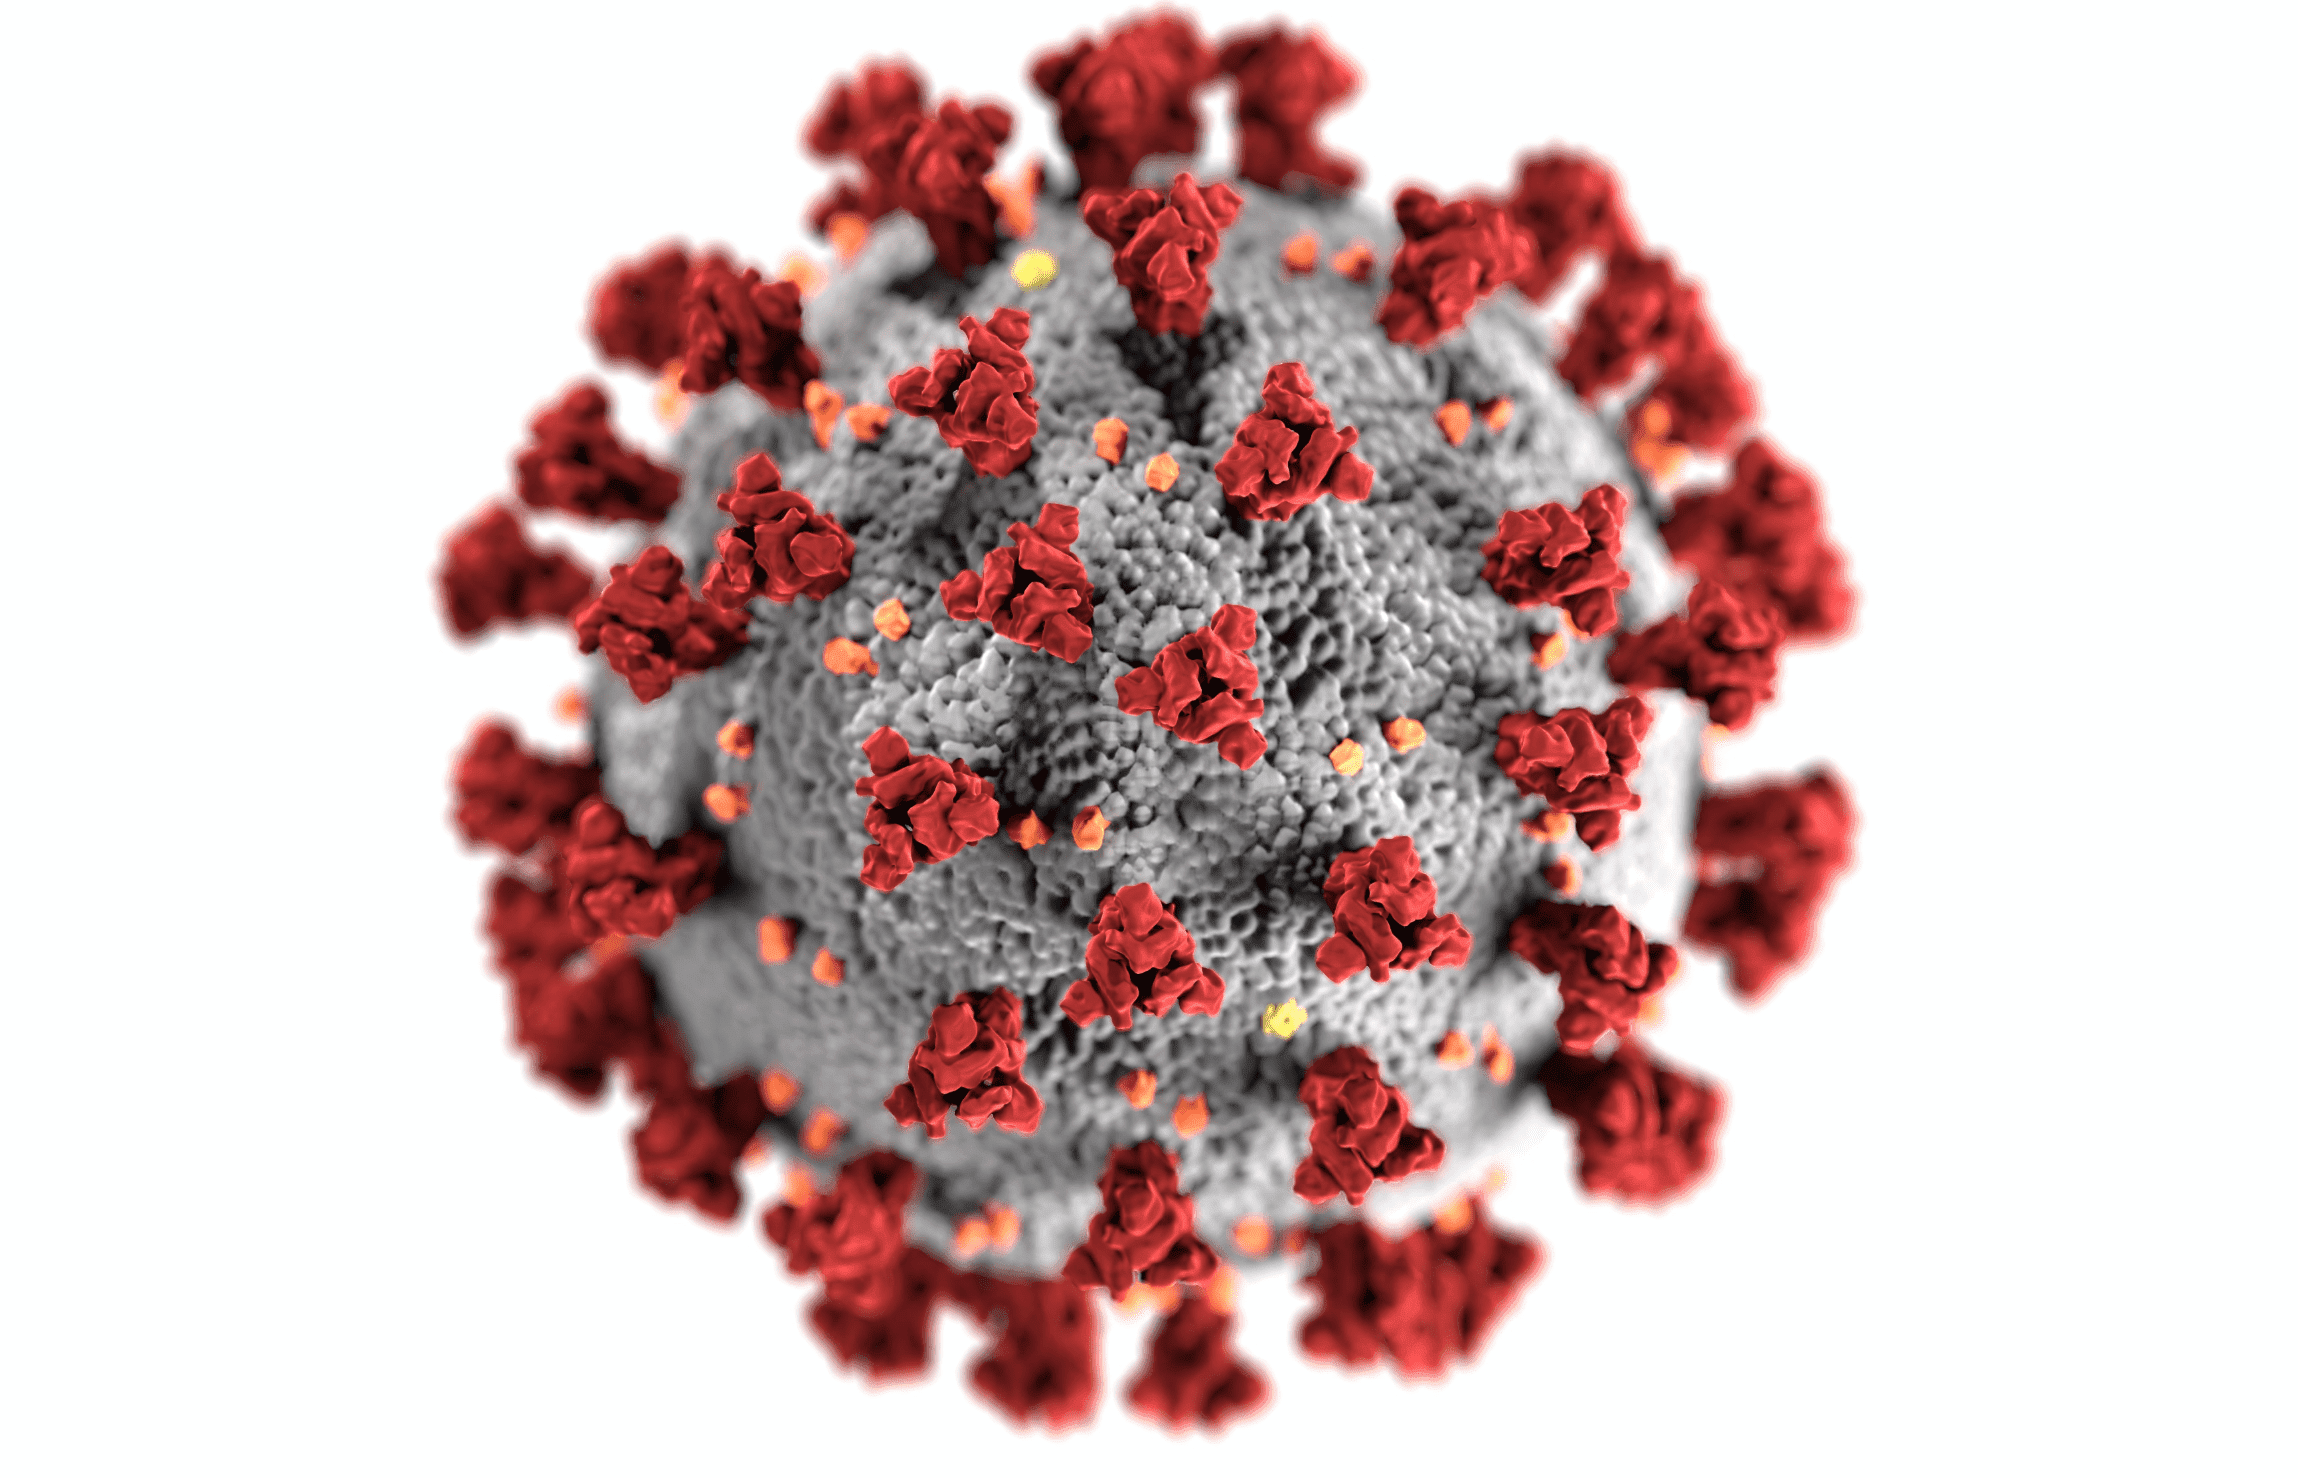  Illustration microscopique du corona virus. | Source: Pexels